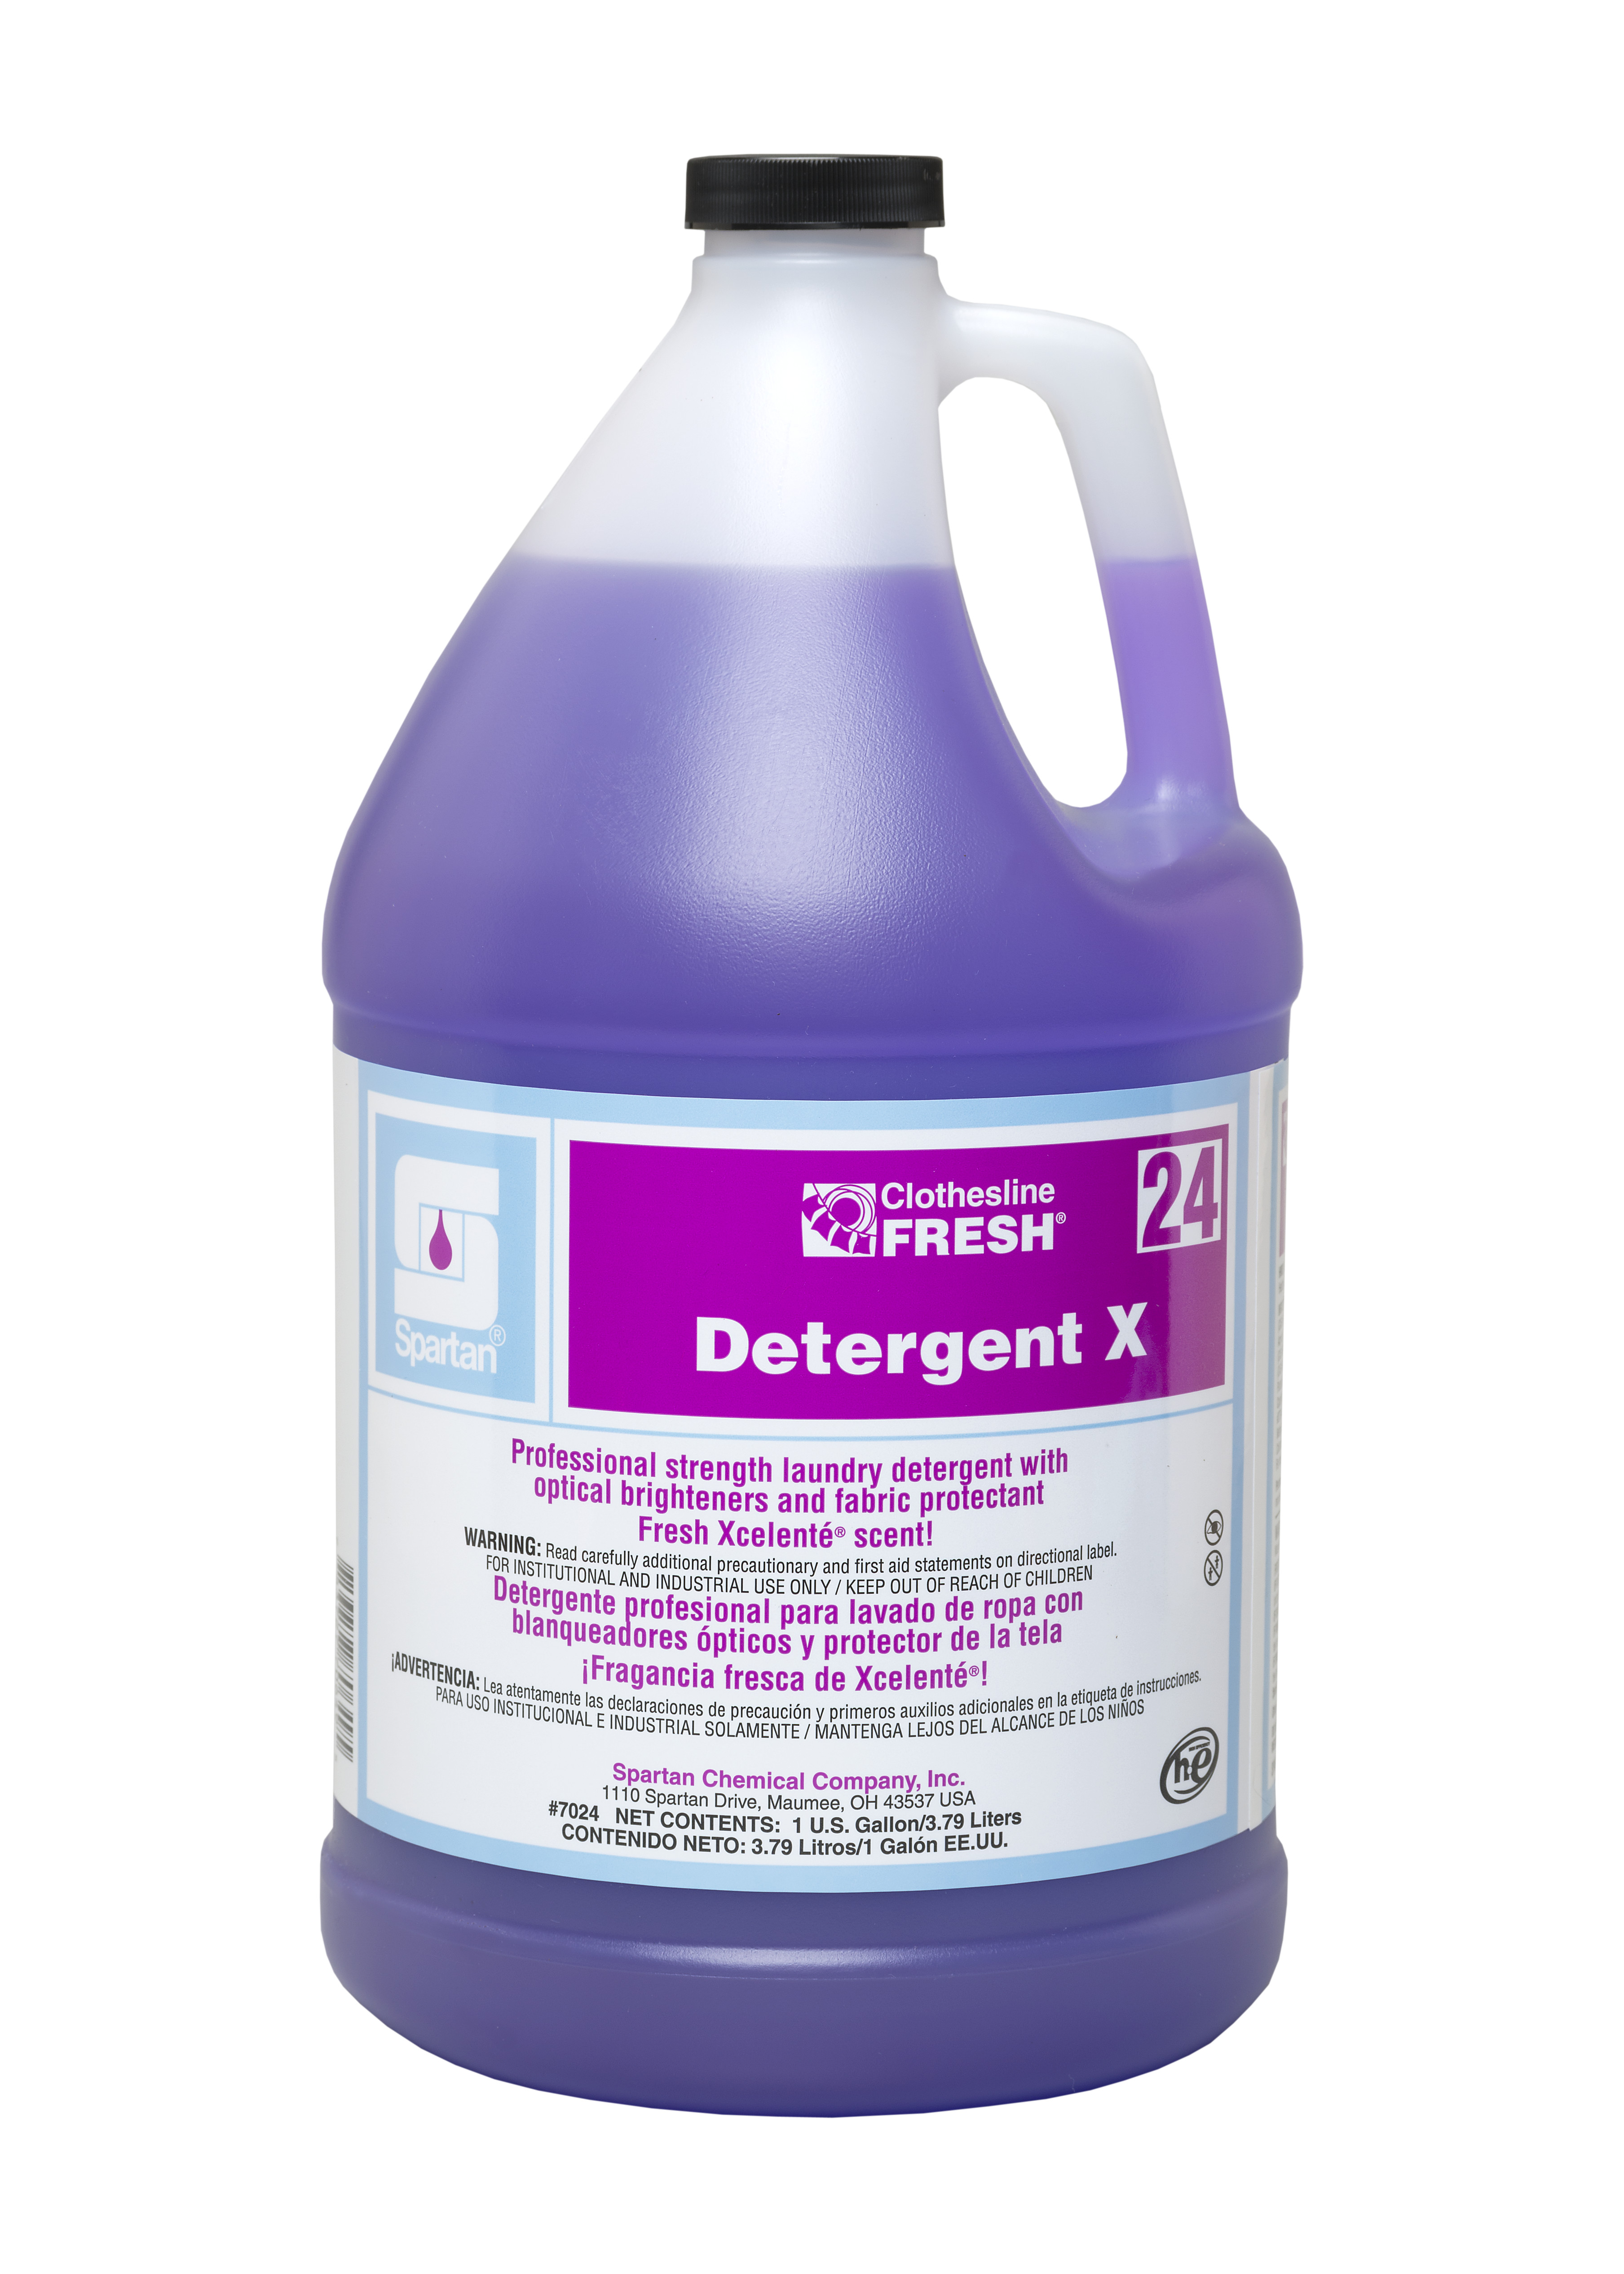 Spartan Chemical Company Clothesline Fresh Detergent X 24, 1 Gallon